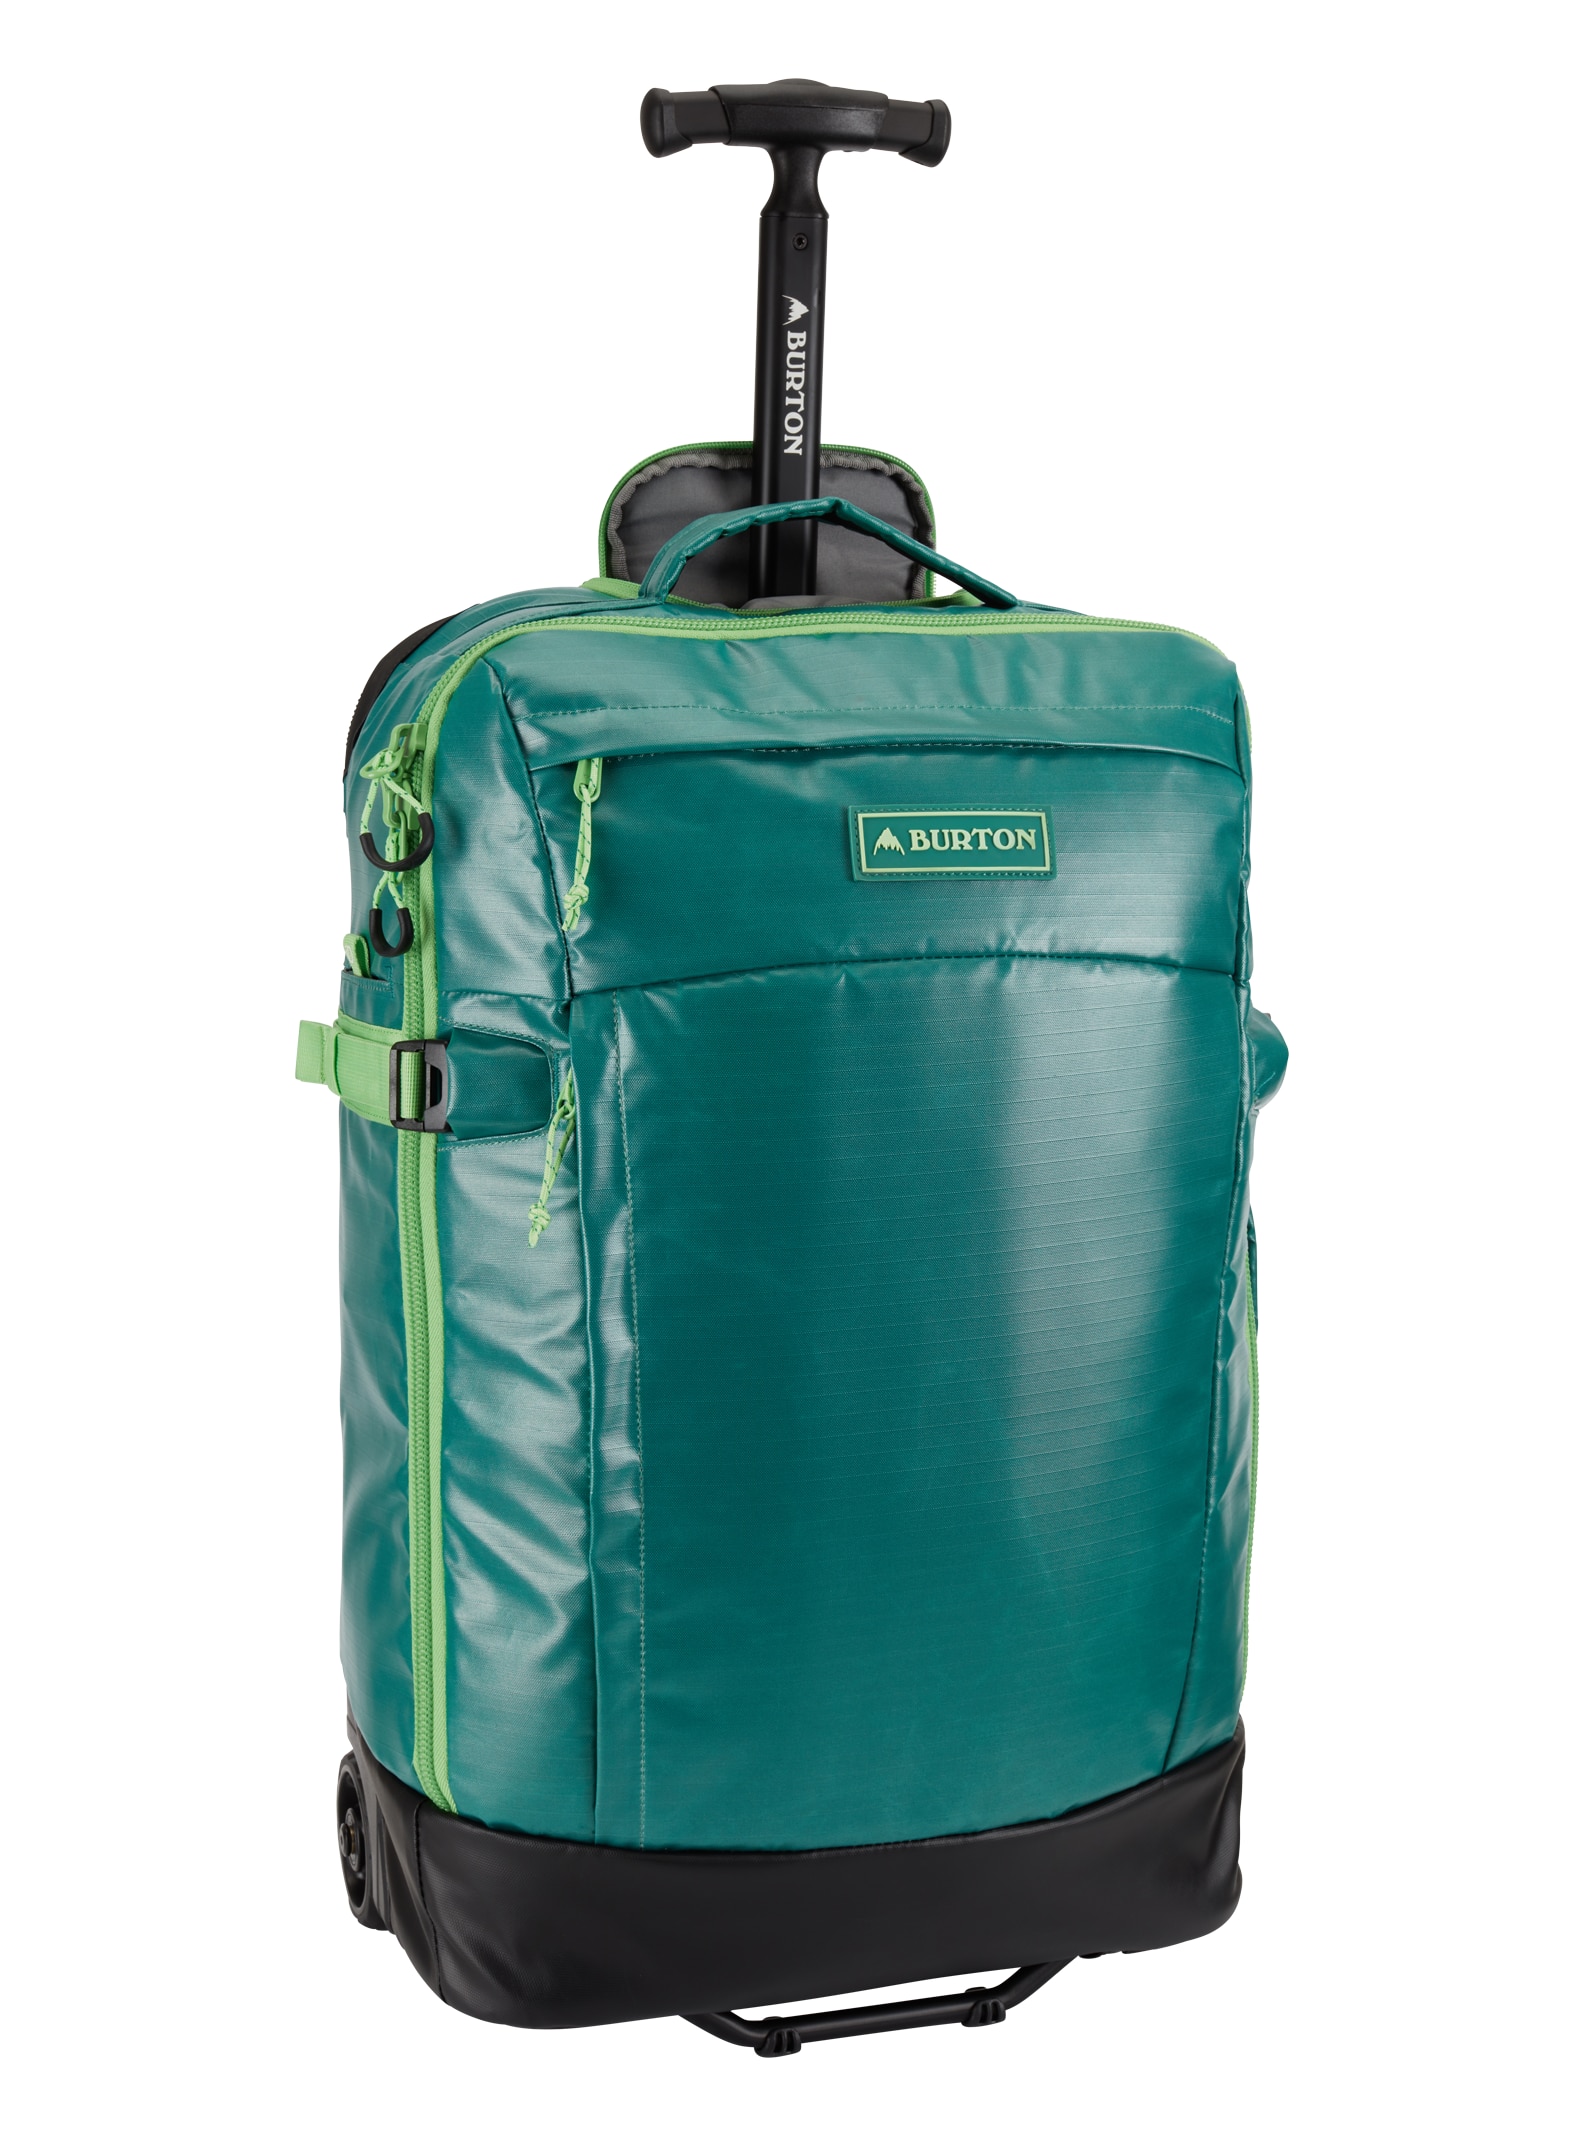 Burton Multipath 40L Carry-On Travel Bag | Burton.com Spring 2021 US